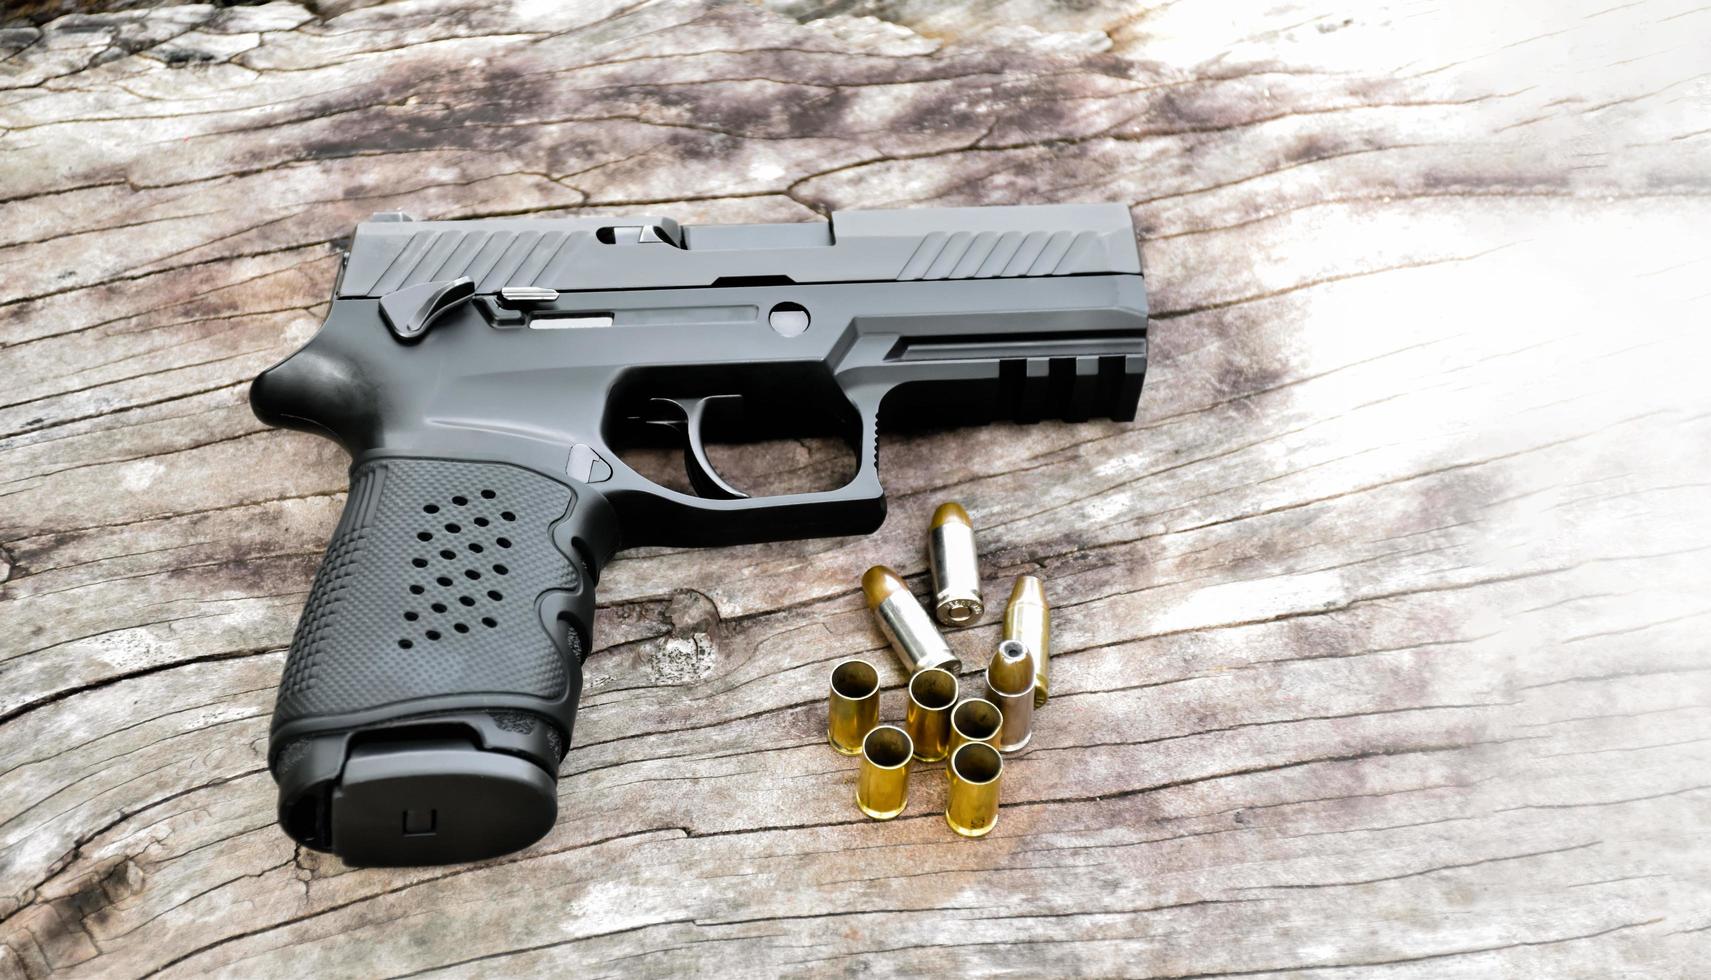 arma de pistola preta automática de 9 mm e balas na mesa de madeira. foto